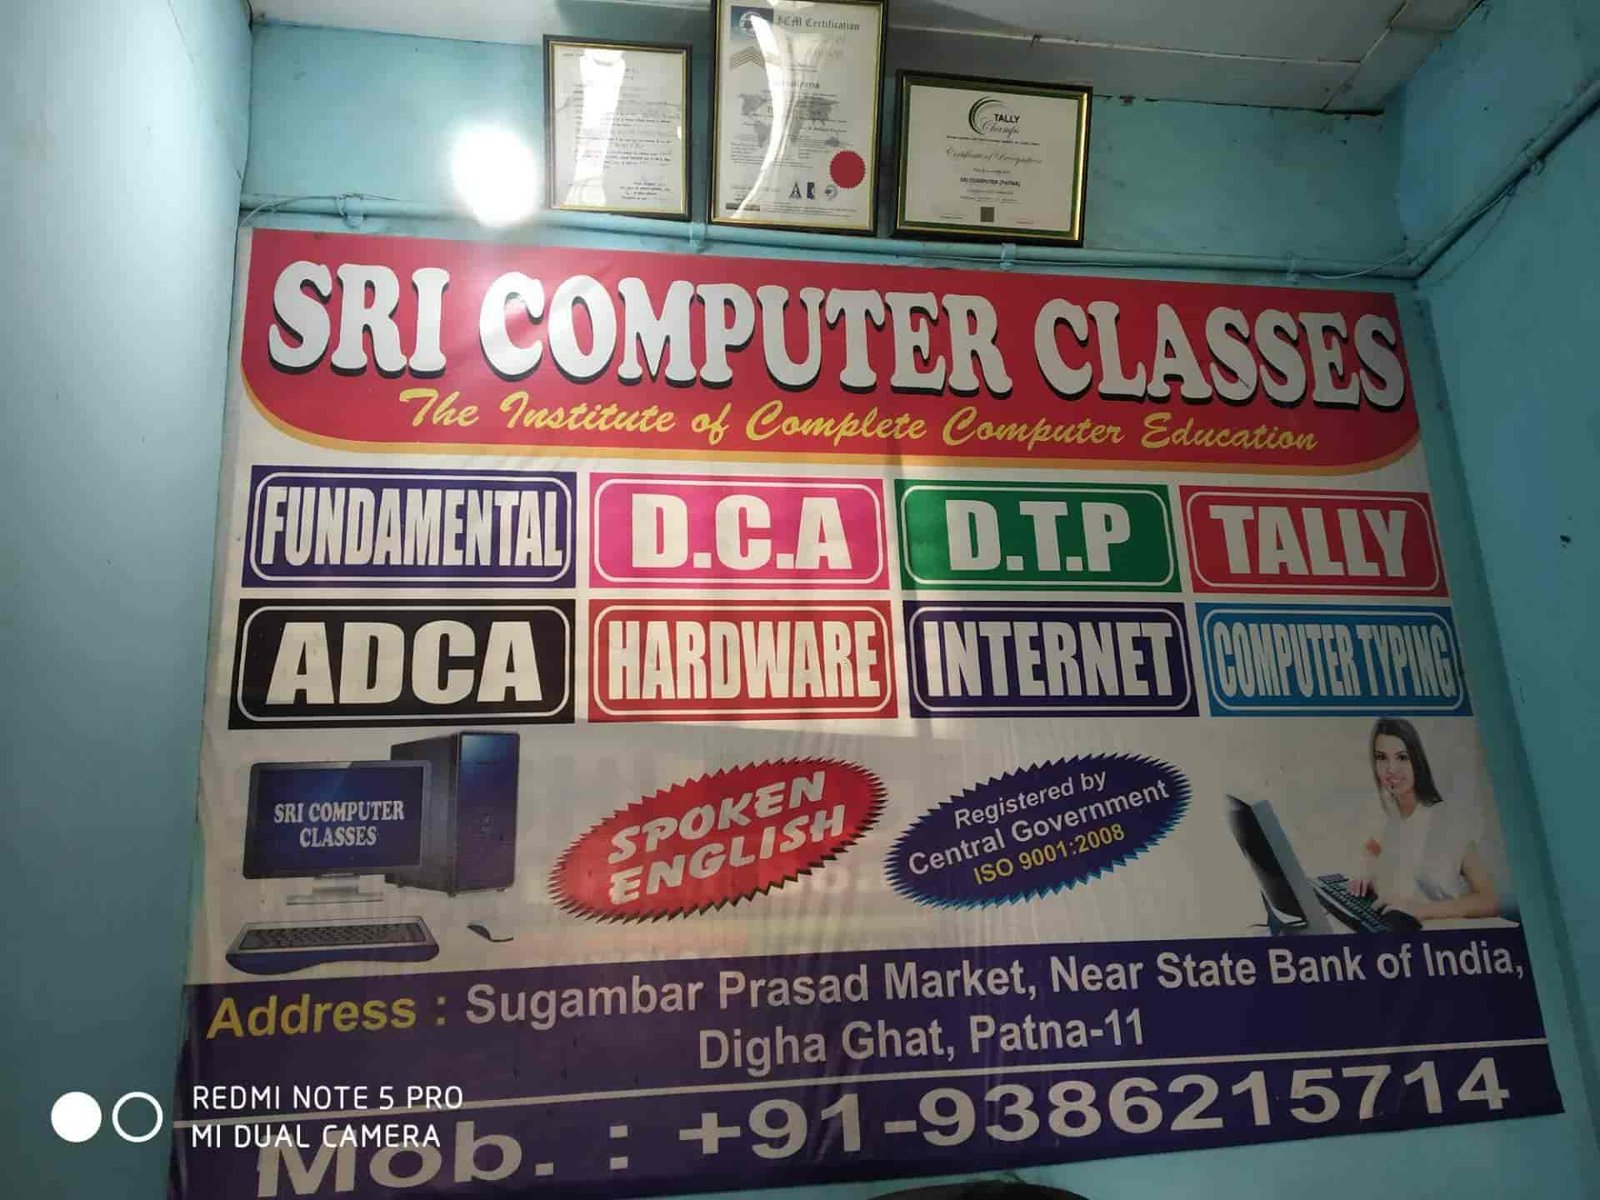 Sri Computer Classes